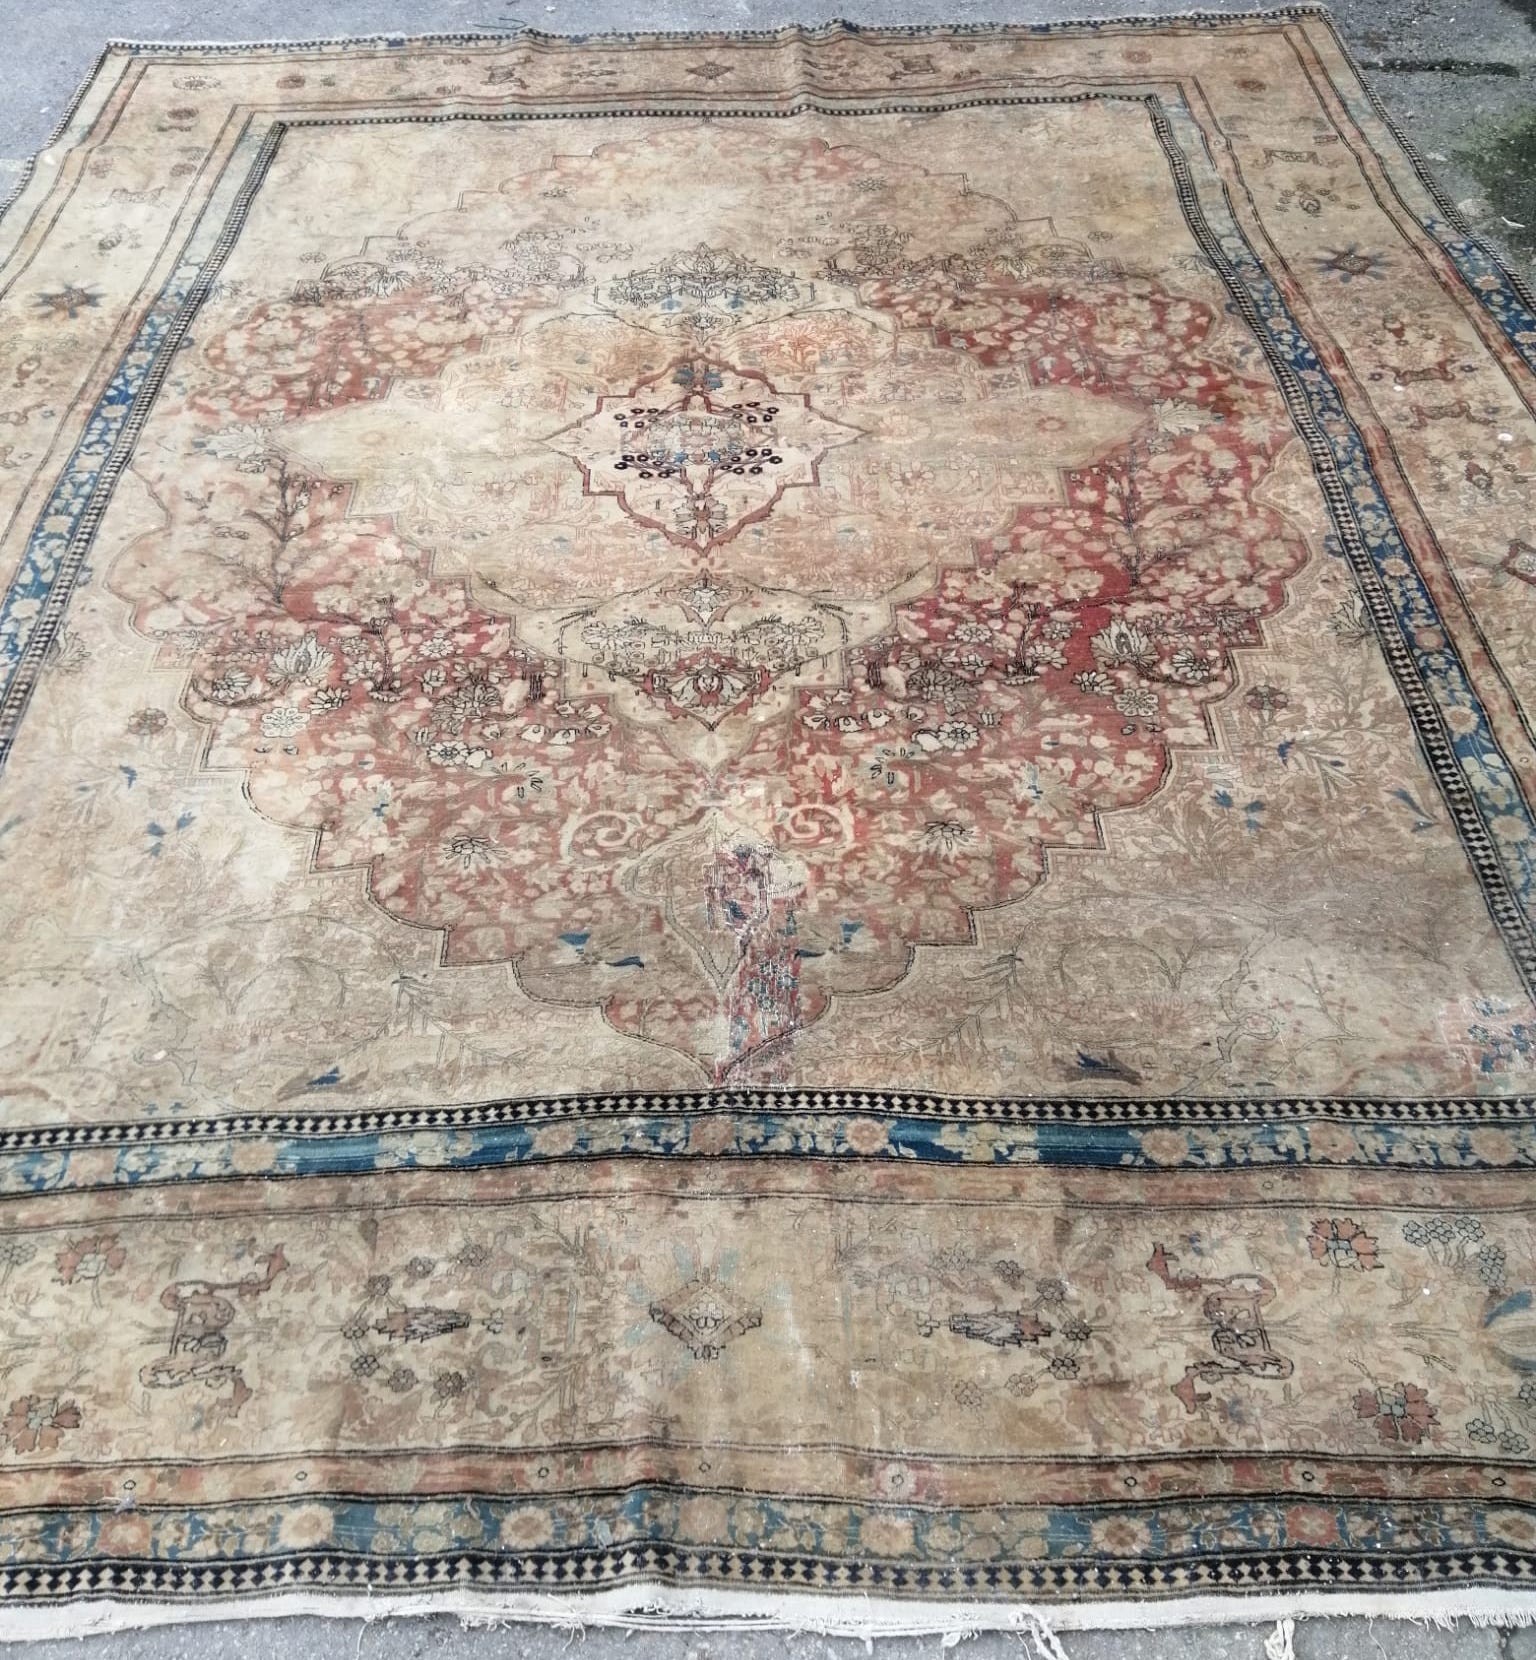 A fine Persian cream ground carpet, in distressed condition, 360 x 300cm